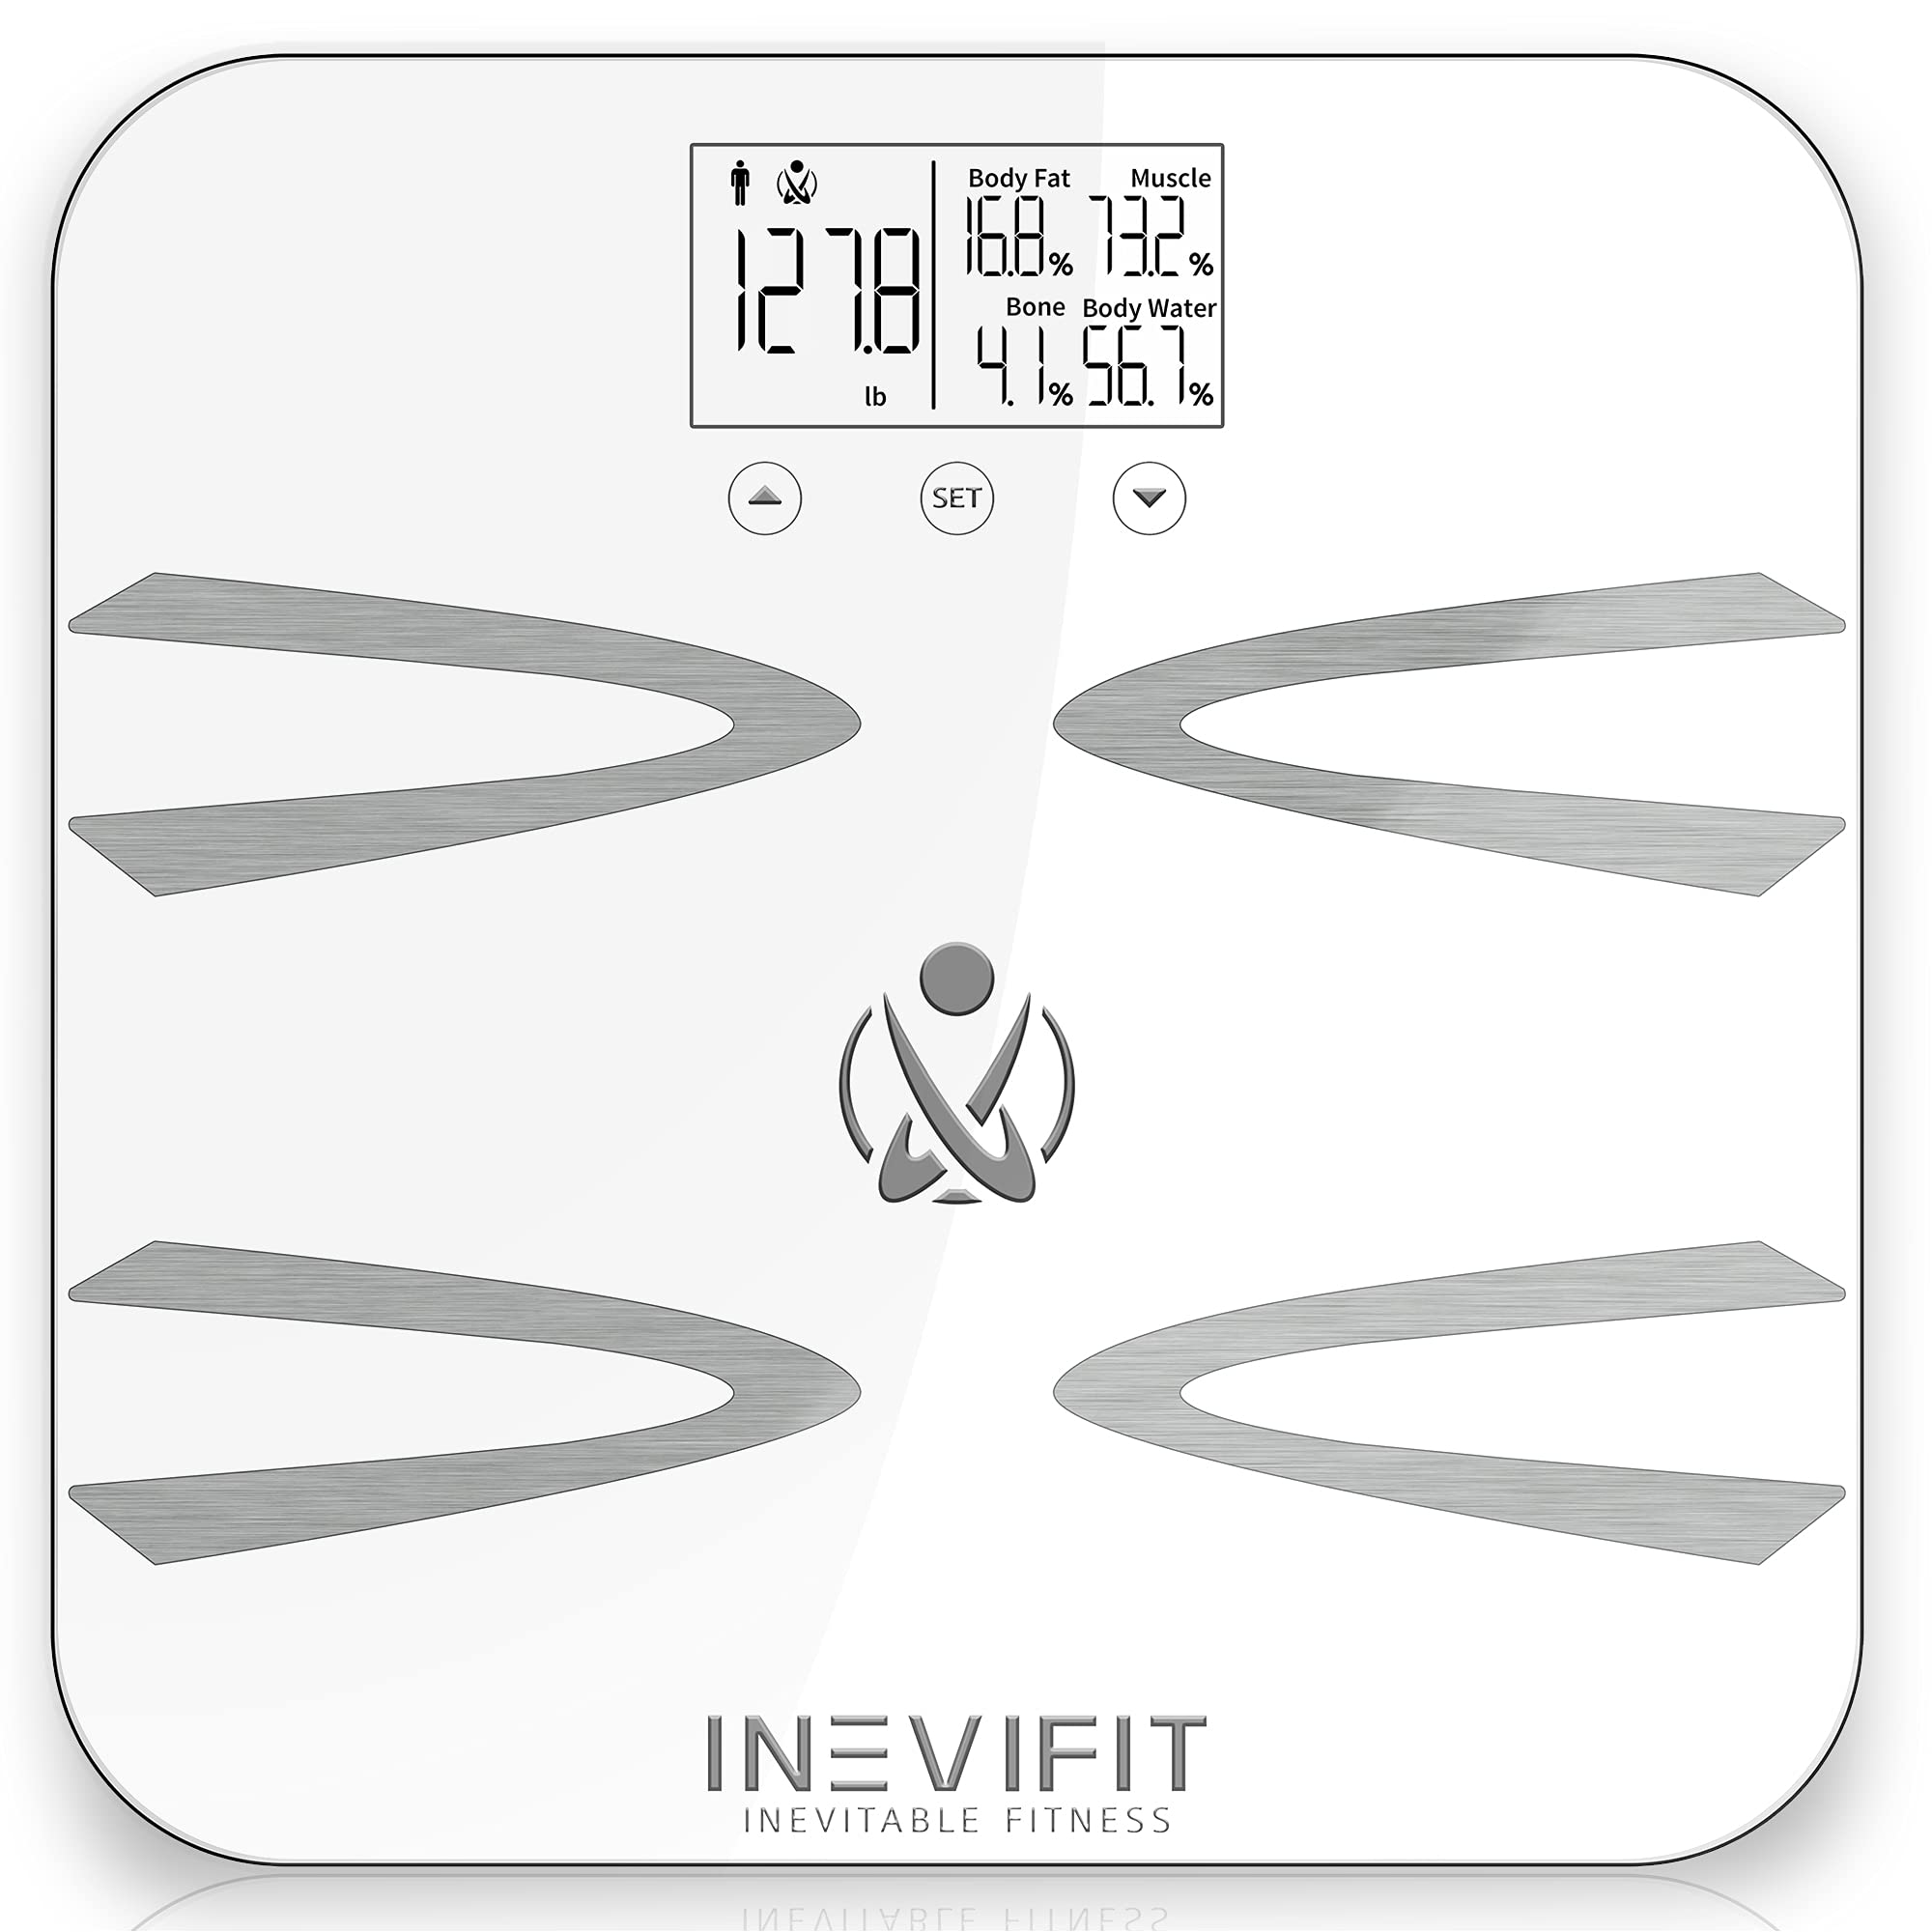 INEVIFIT Bathroom Scale, Highly Accurate Digital Bathroom Body Scale, Measures